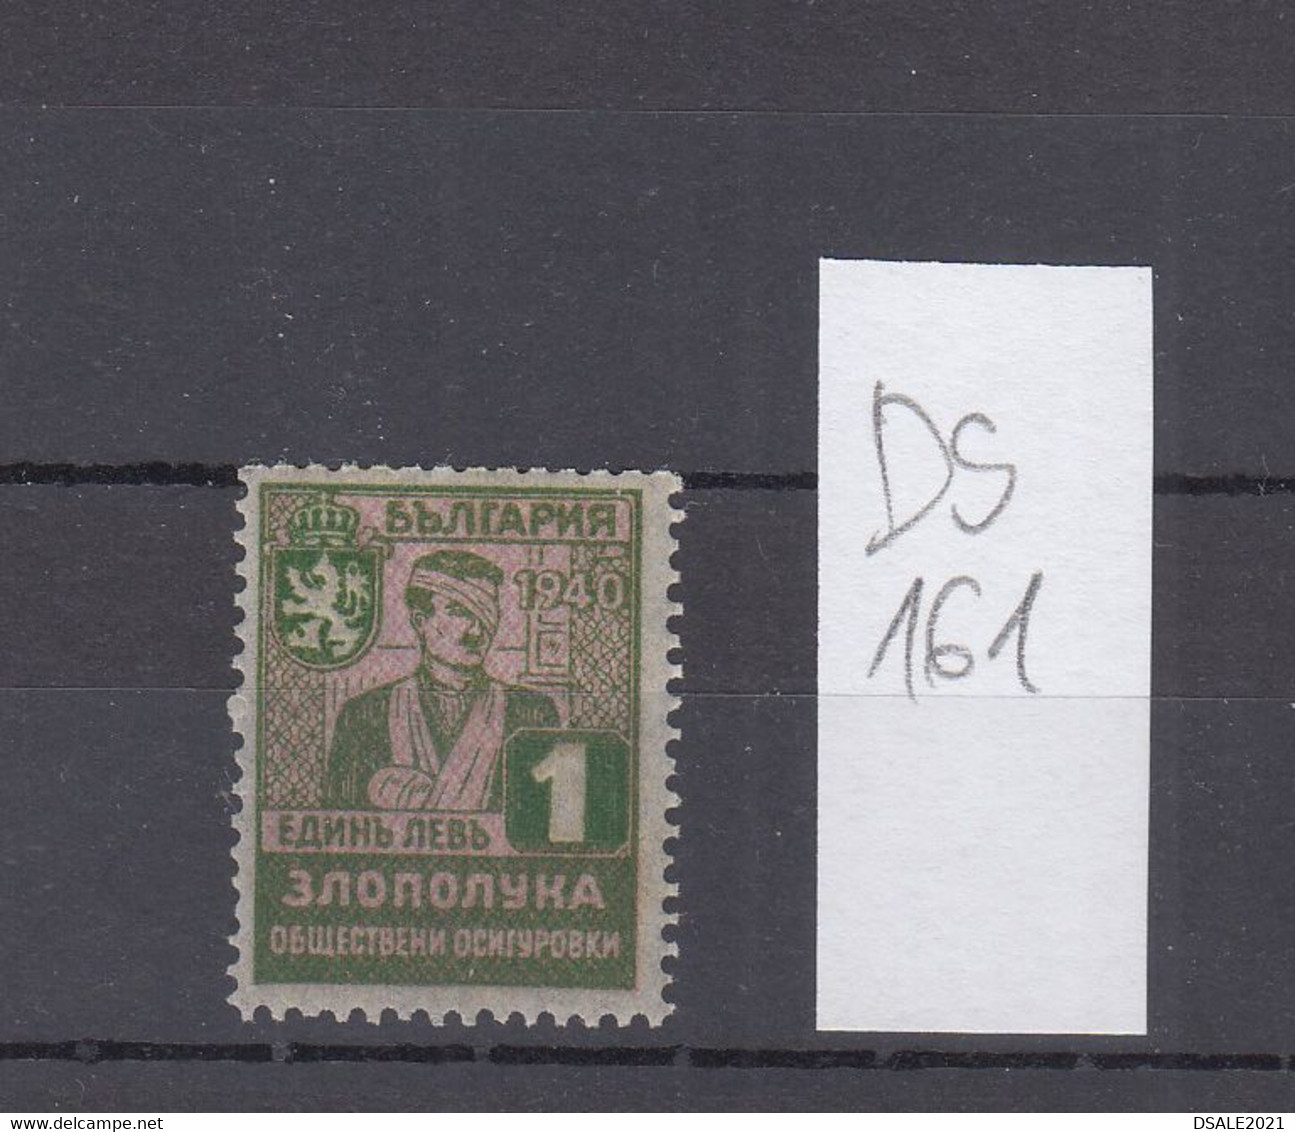 Bulgaria Bulgarie Bulgarije 1940 Social Insurance 1Lv. Accident Insurance Stamp Fiscal Revenue Bulgarian (ds161) - Timbres De Service